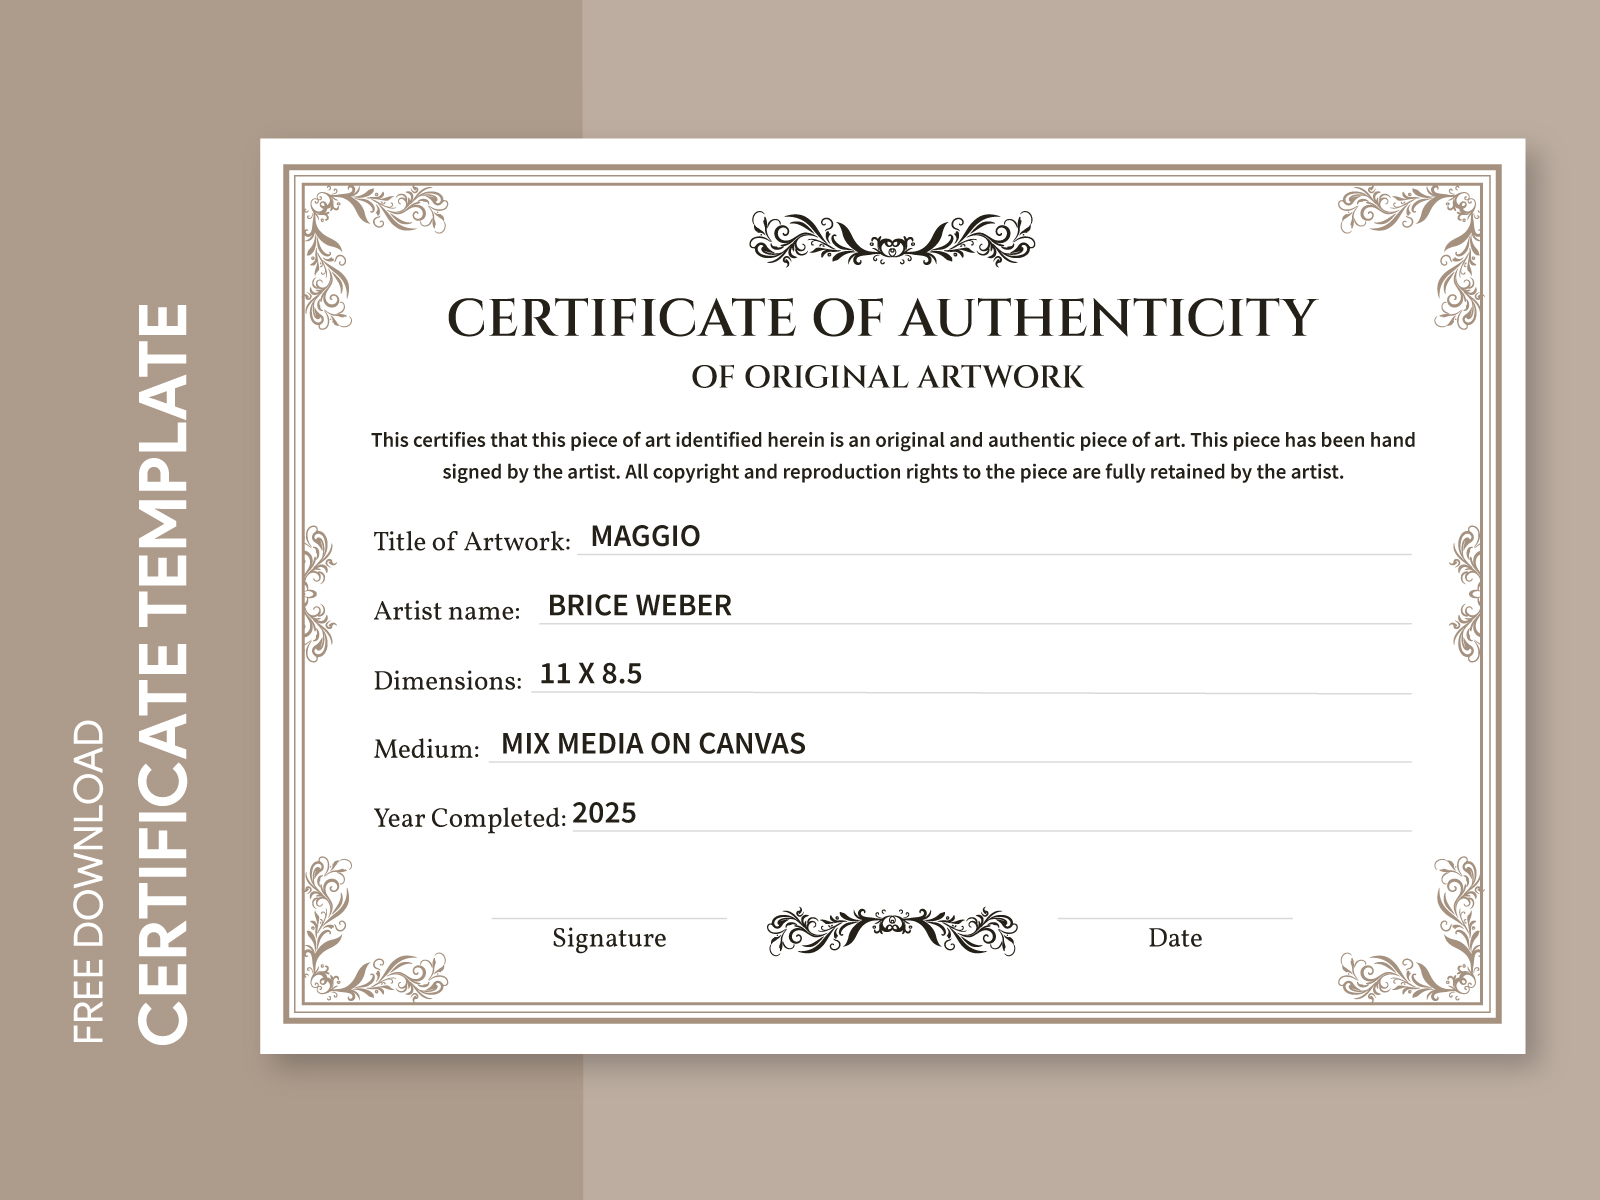 Certificate of Authenticity Free Google Docs Template - gdoc.io